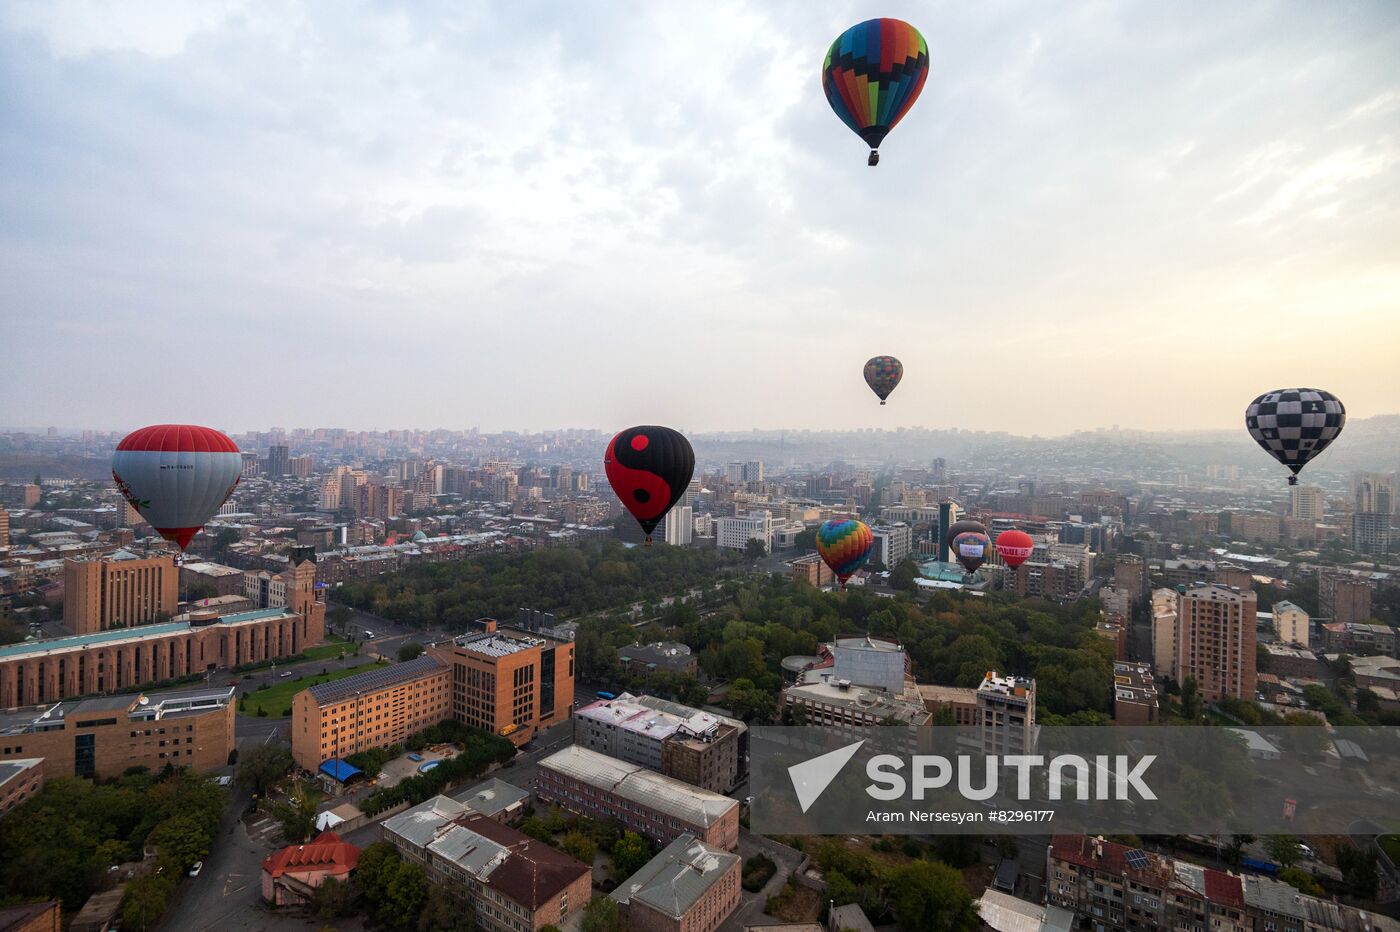 Armenia Balloon Festival